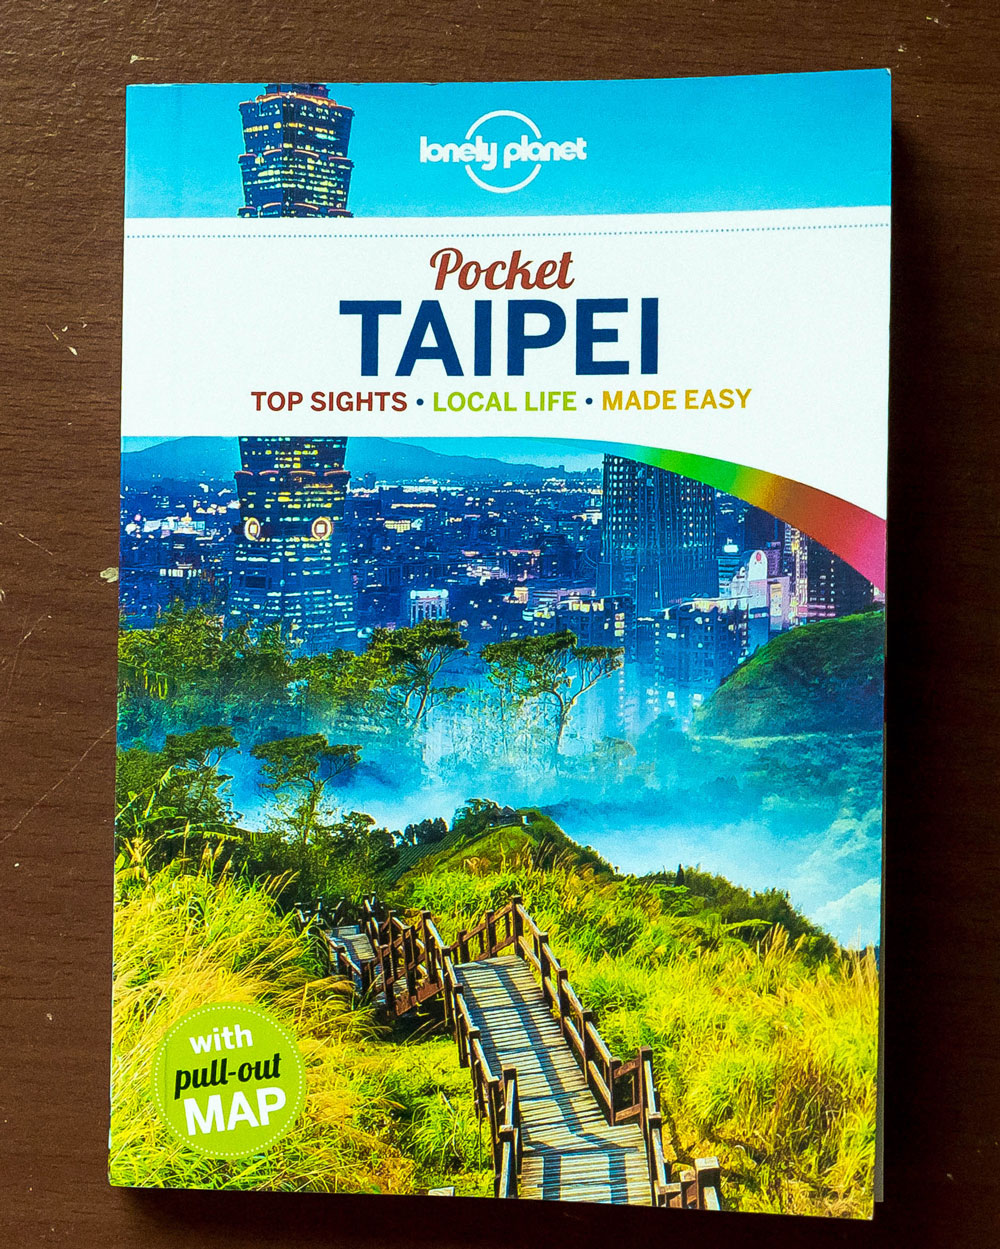 Pocket Taipei pocket guide